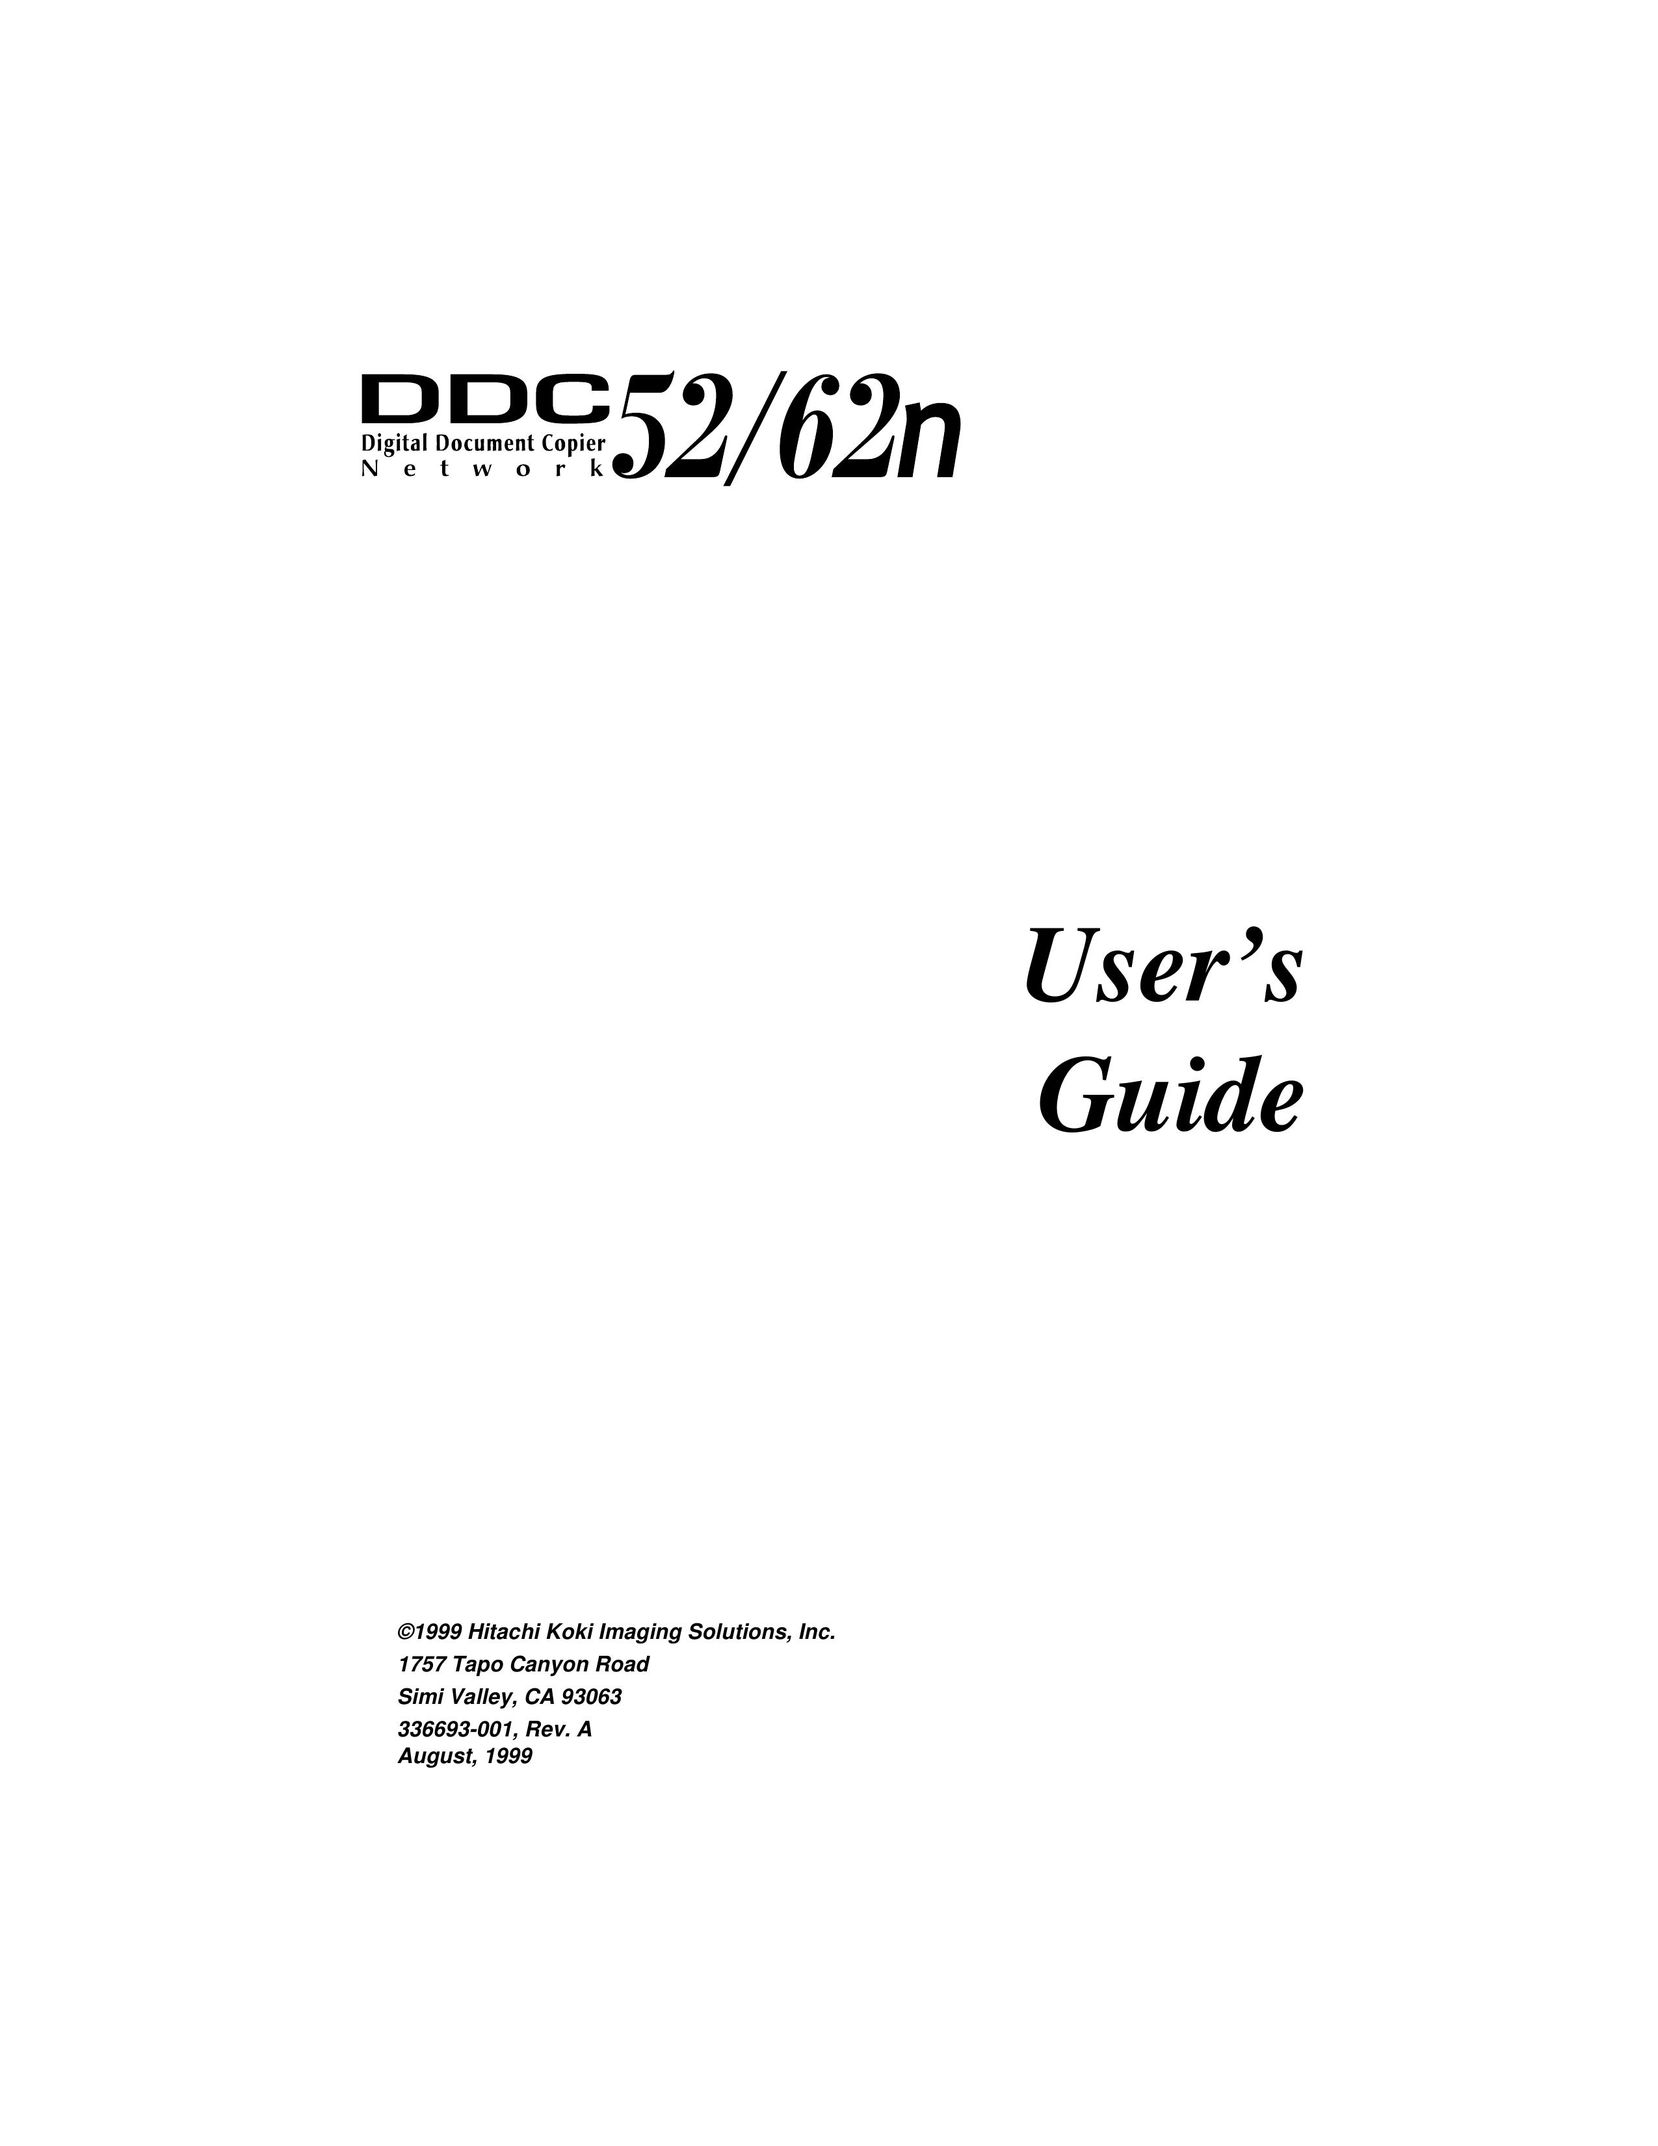 Hitachi Koki USA DDC 62N Copier User Manual